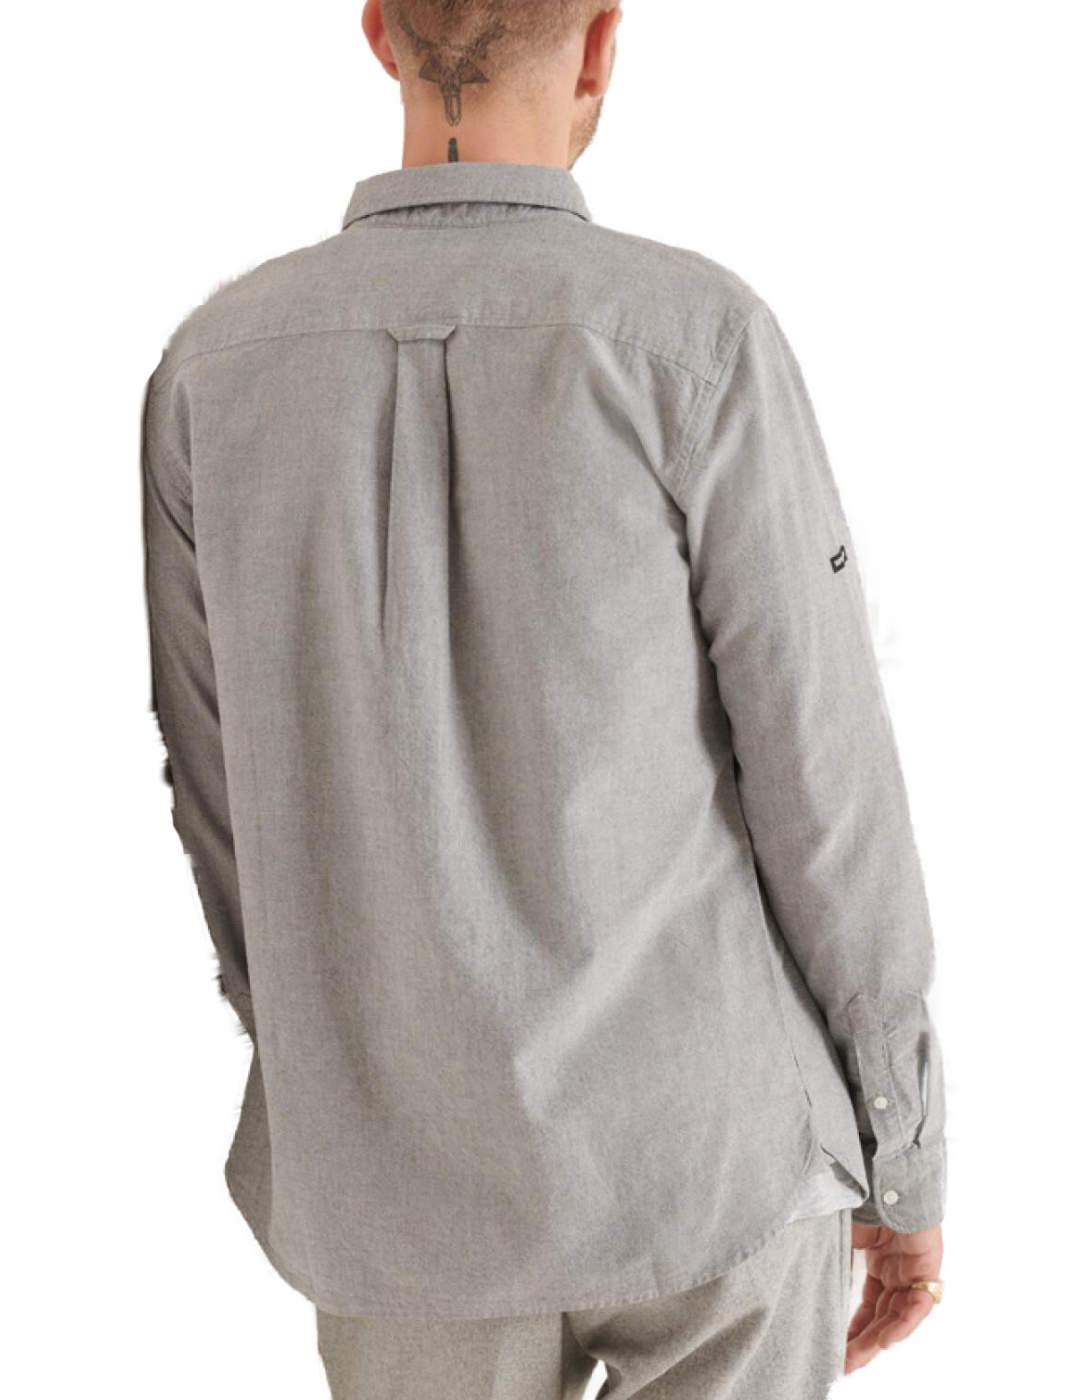 Camisa Supedry Studio oxford gris para hombre-z